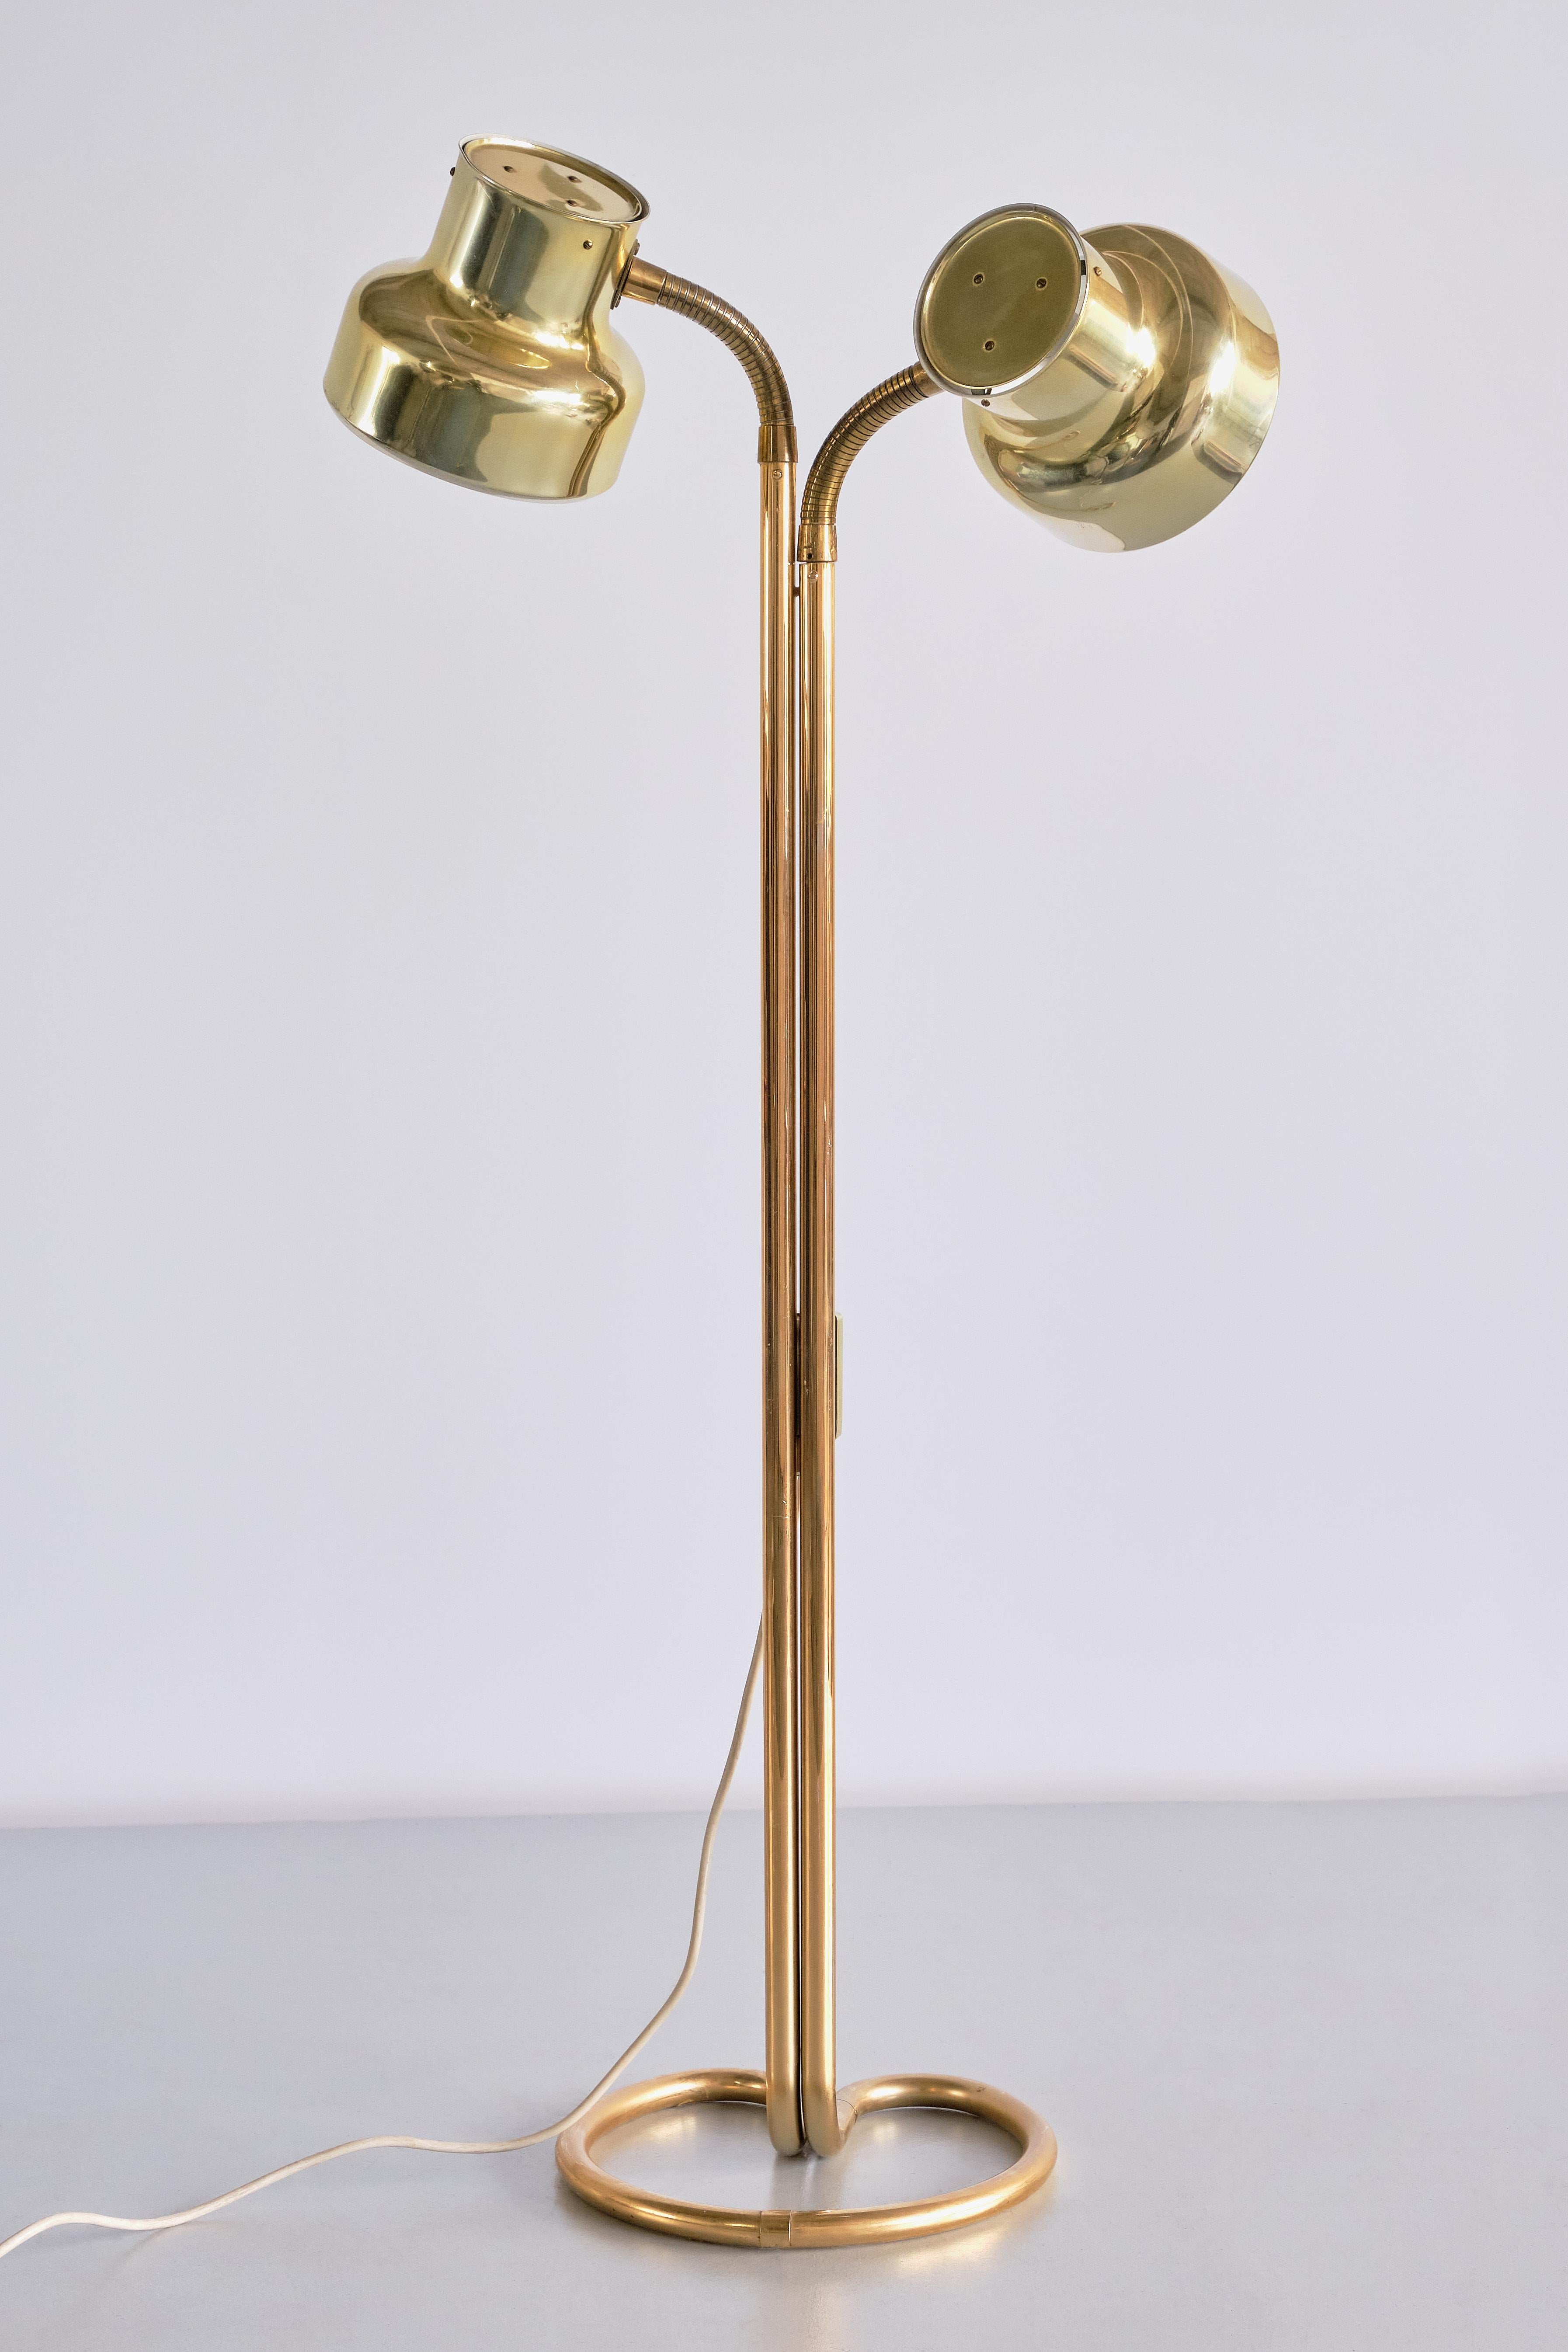 Anders Pehrson 'Bumling' Floor Lamp in Brass, Atelje Lyktan, Sweden, 1968 For Sale 7